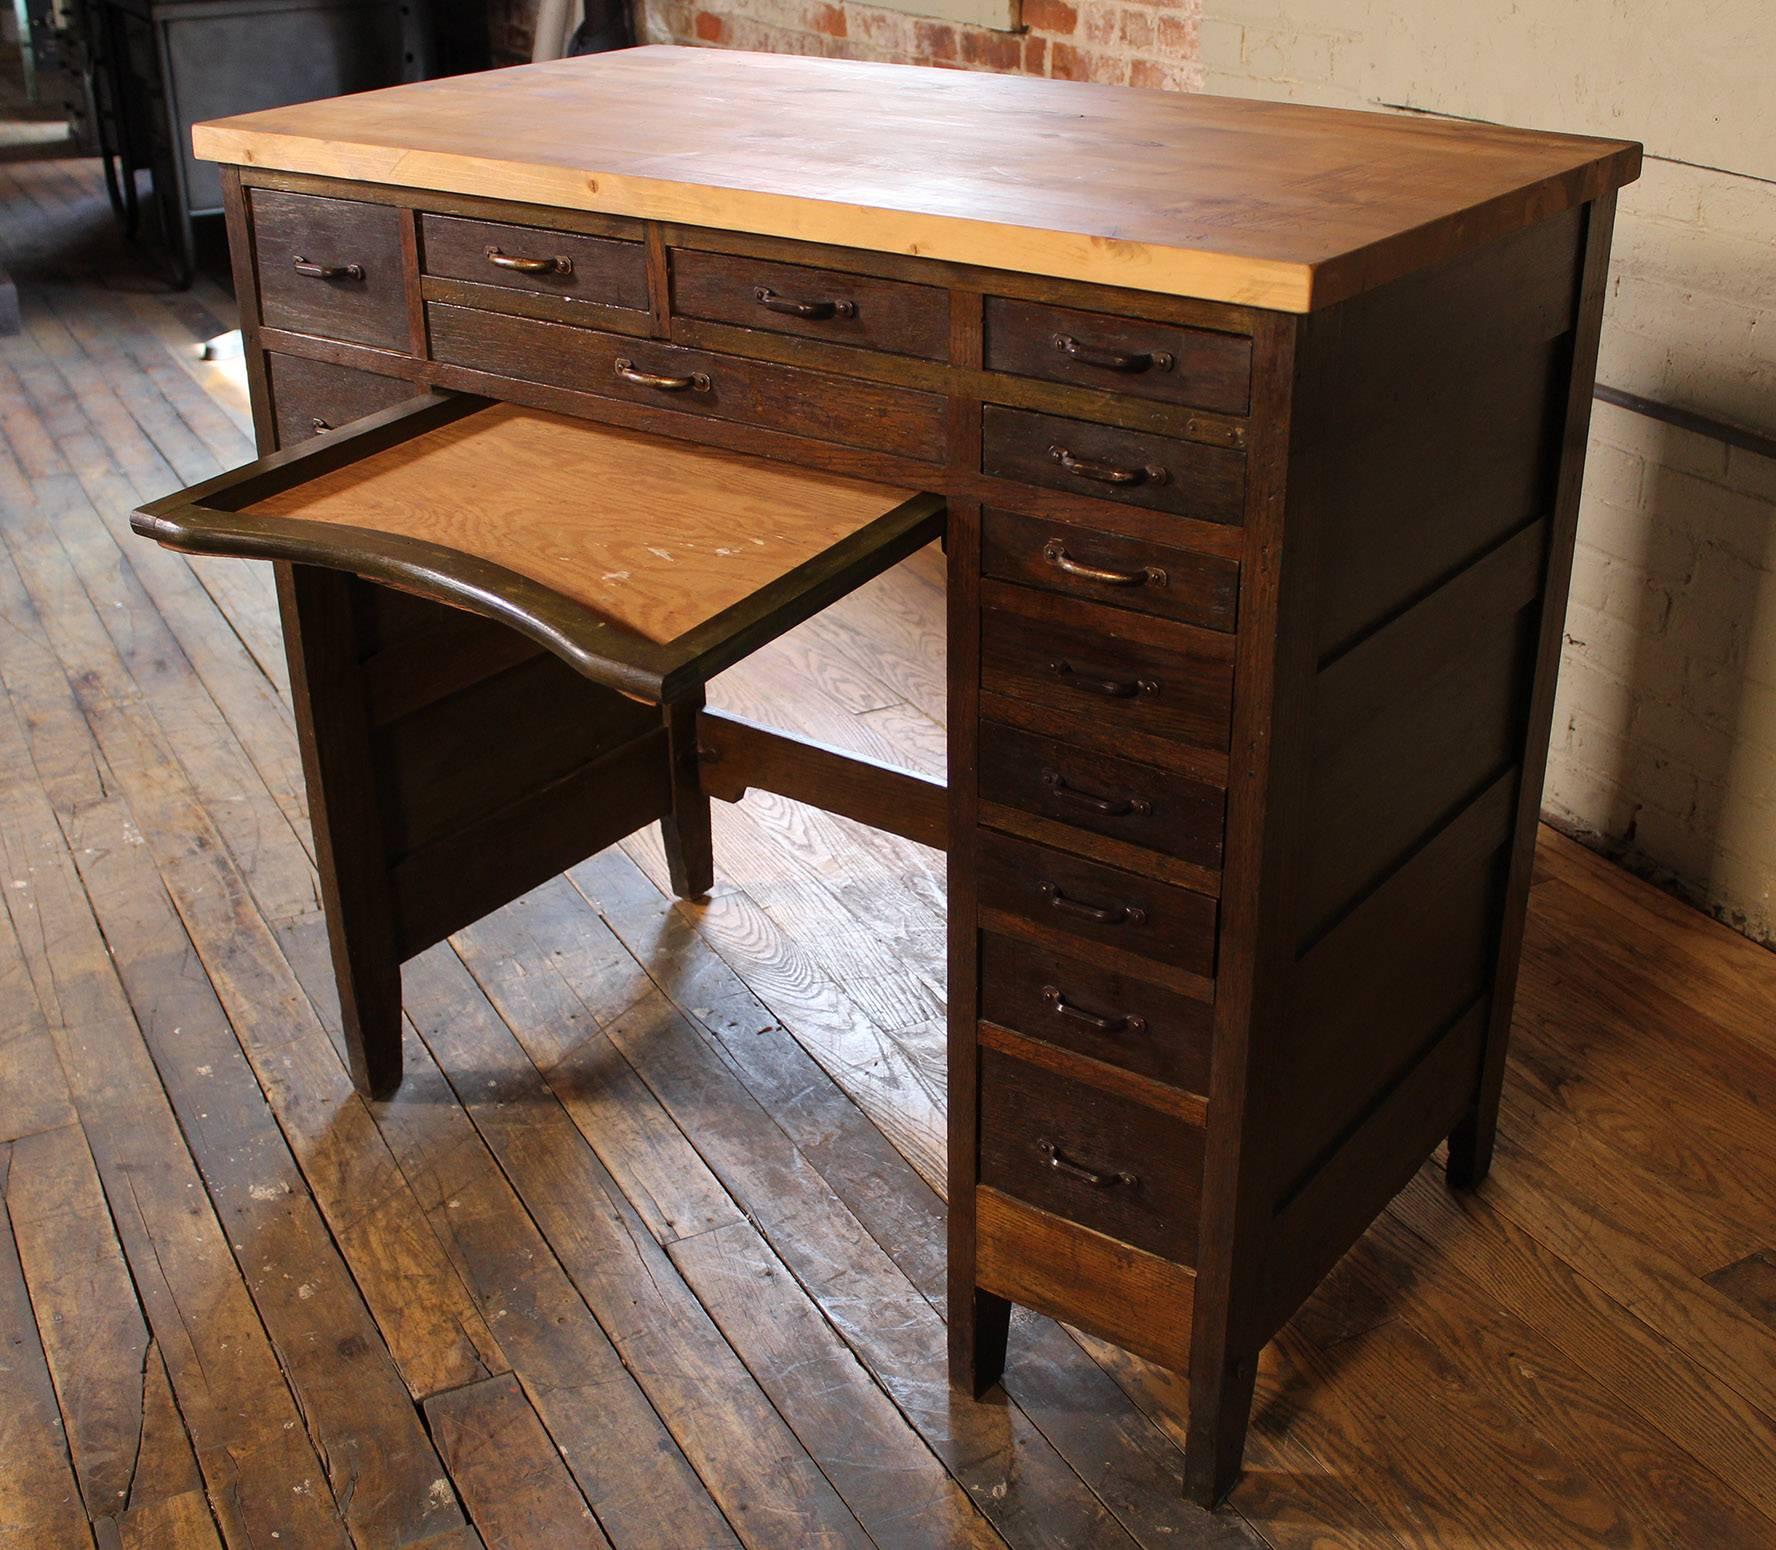 20th Century Jewelers Workbench, Desk, Cabinet, Wooden Vintage Industrial Storage